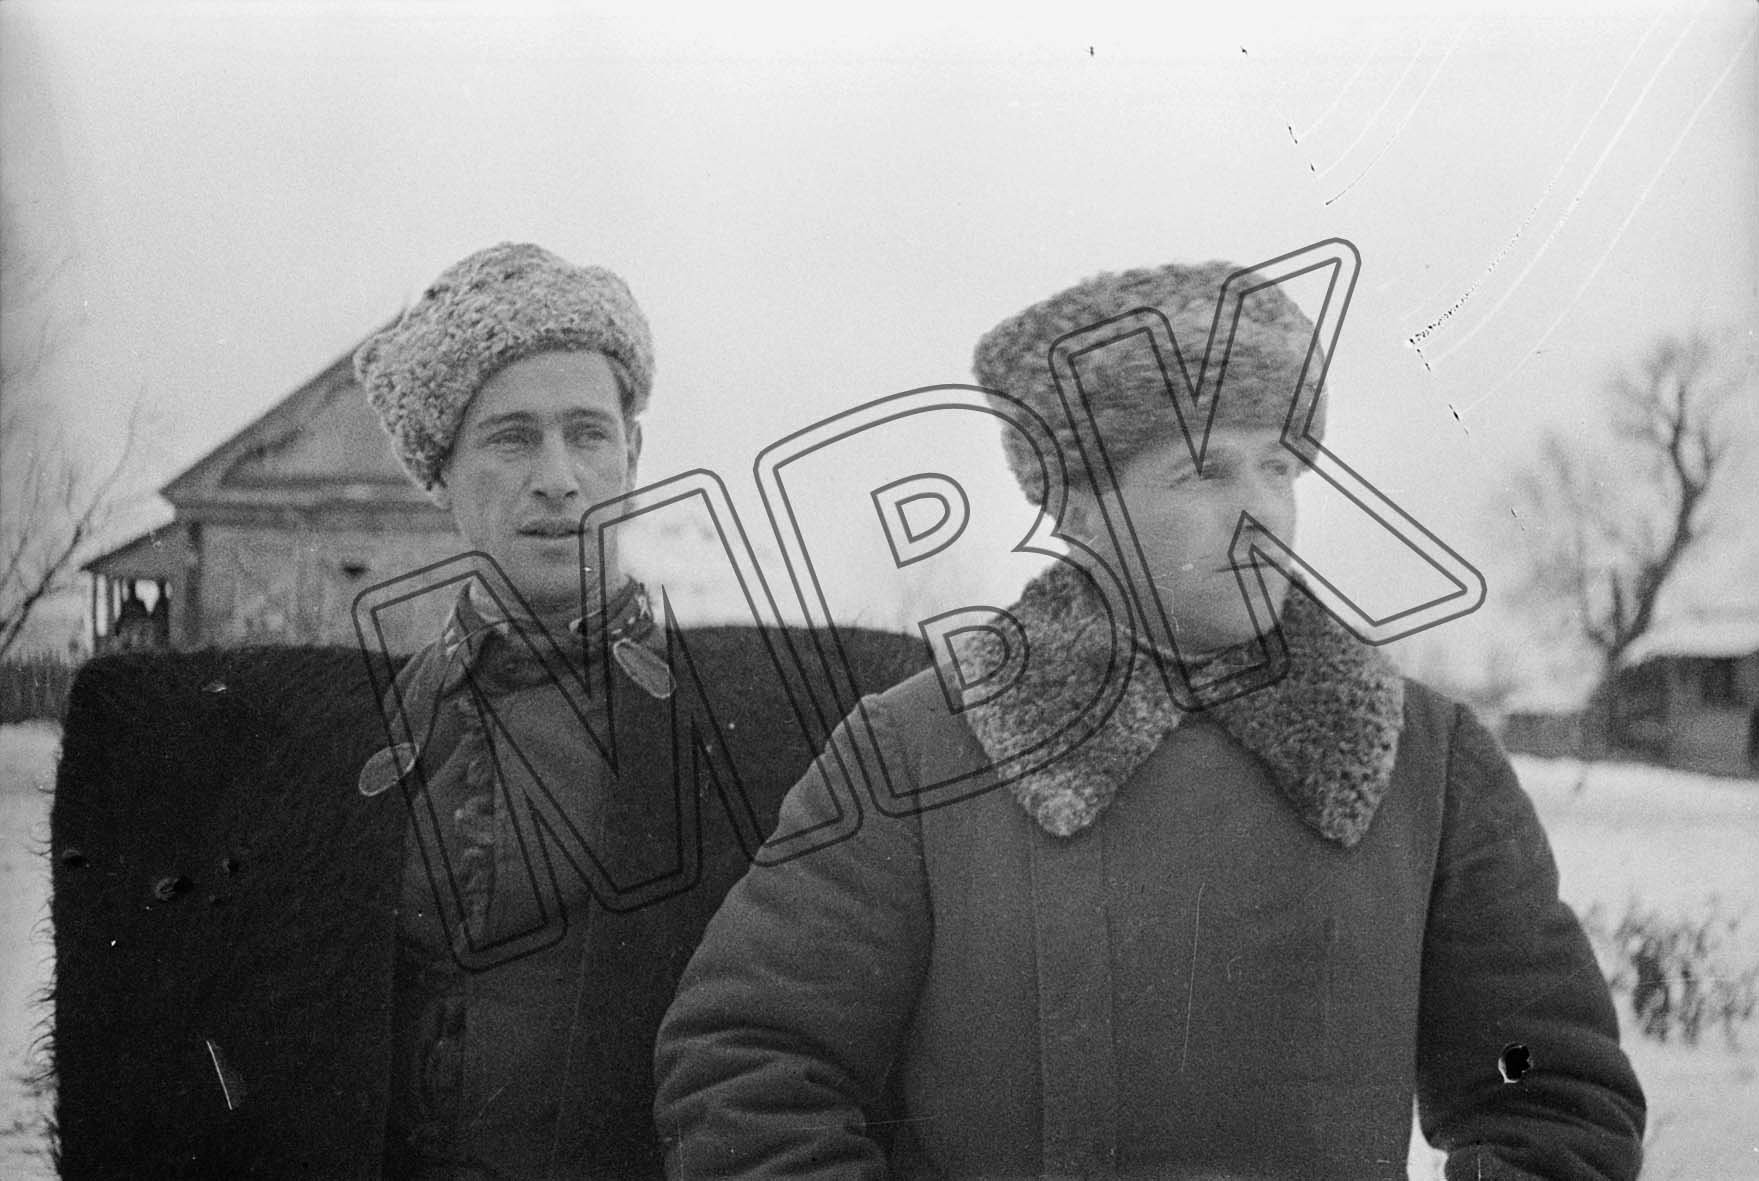 Fotografie: Generalmajor Dowator, Moskauer Gebiet, November 1941 (Museum Berlin-Karlshorst RR-P)